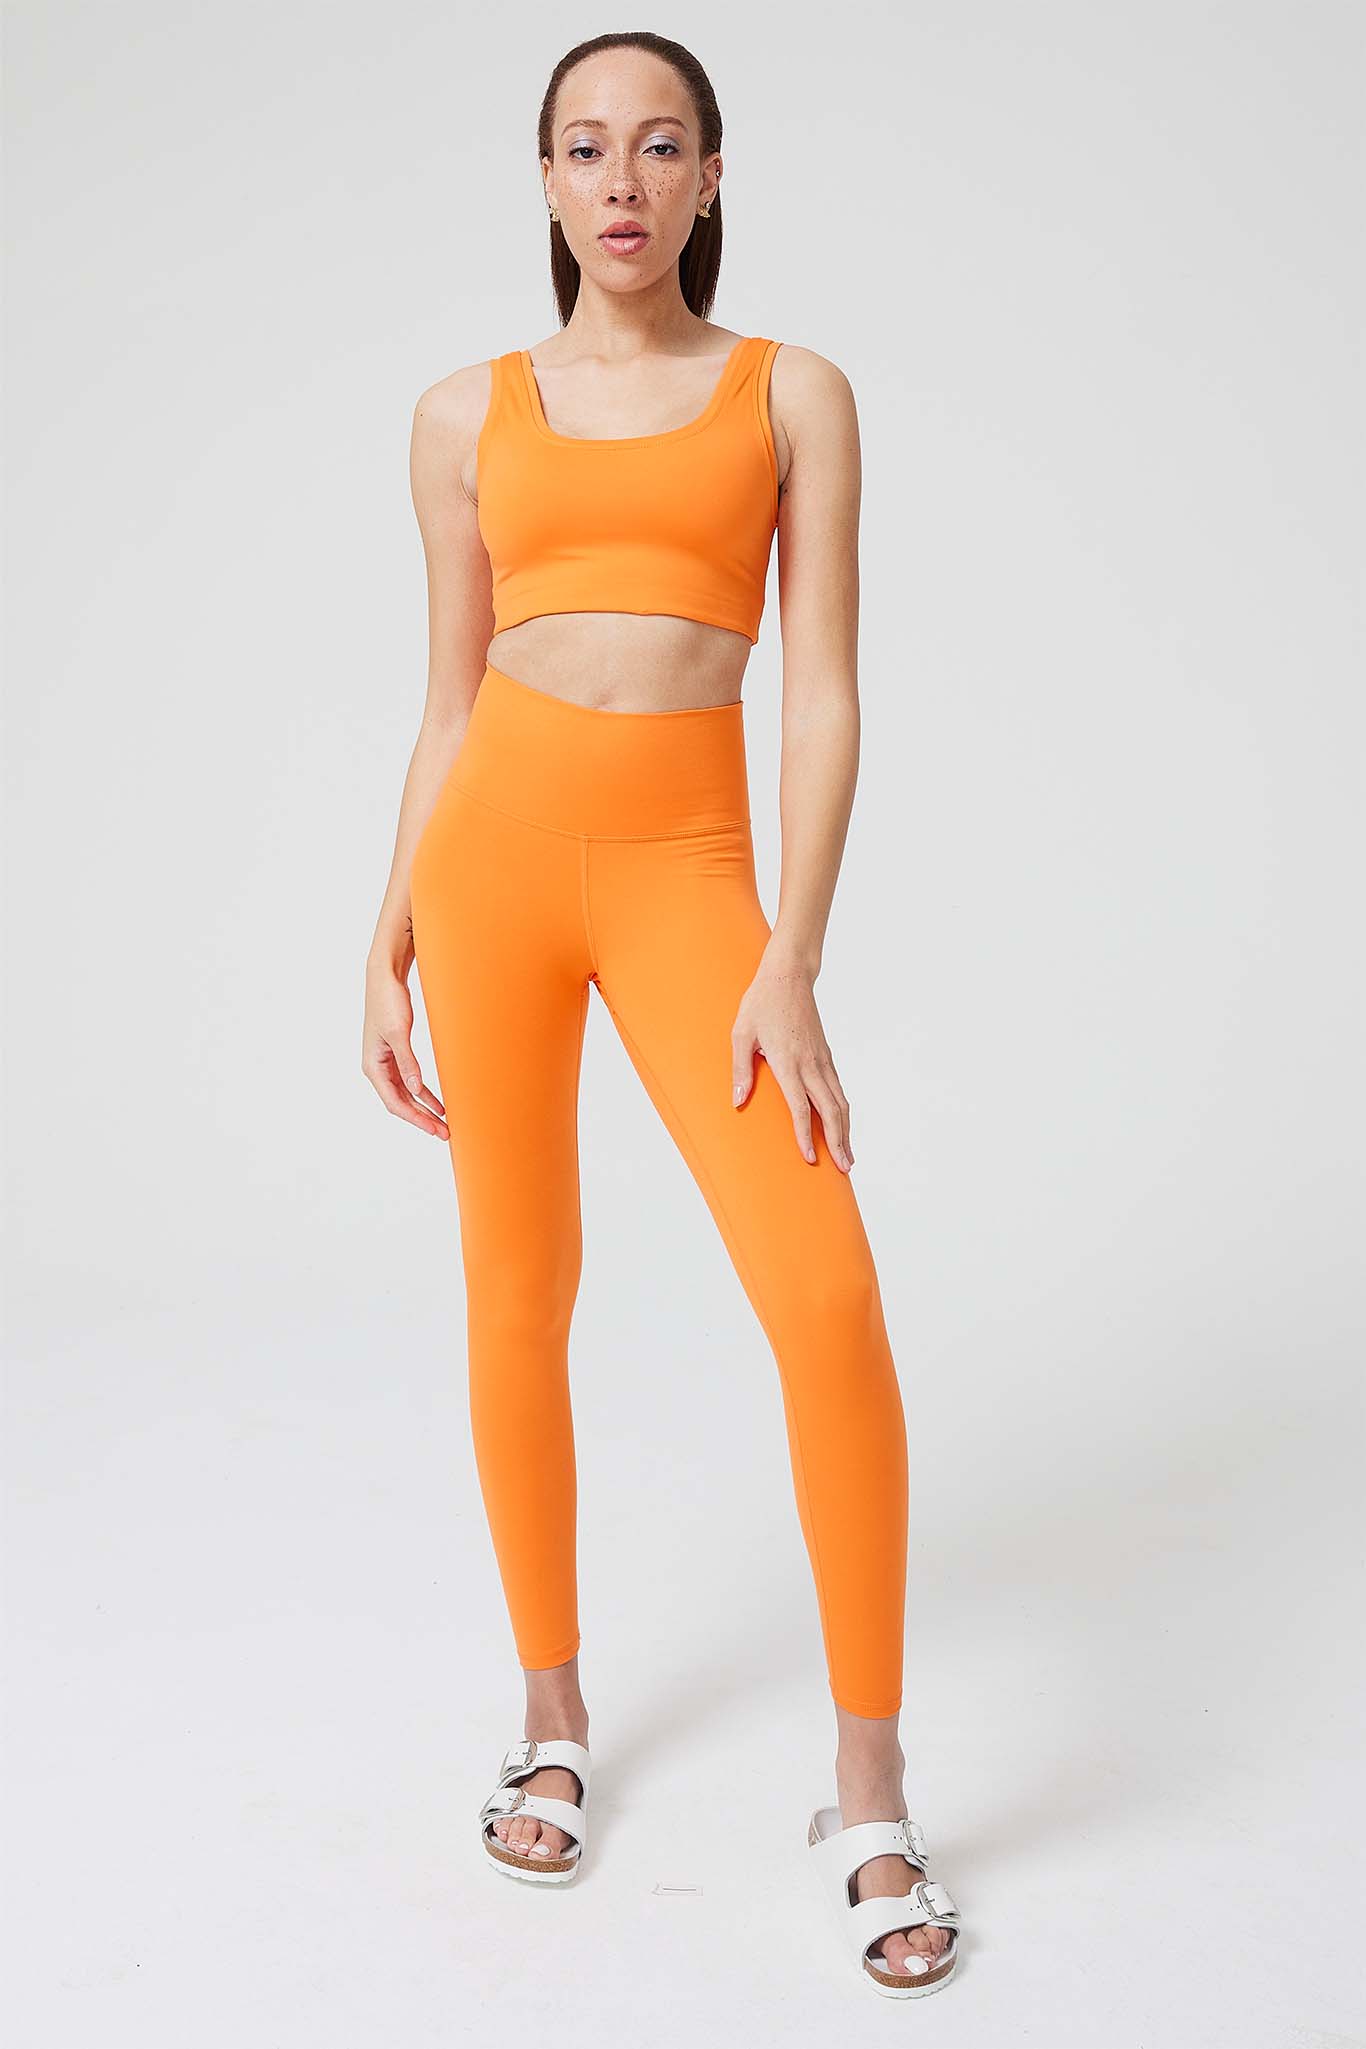 Tangerine* Purple Size X Large Ladies Exercise Pants